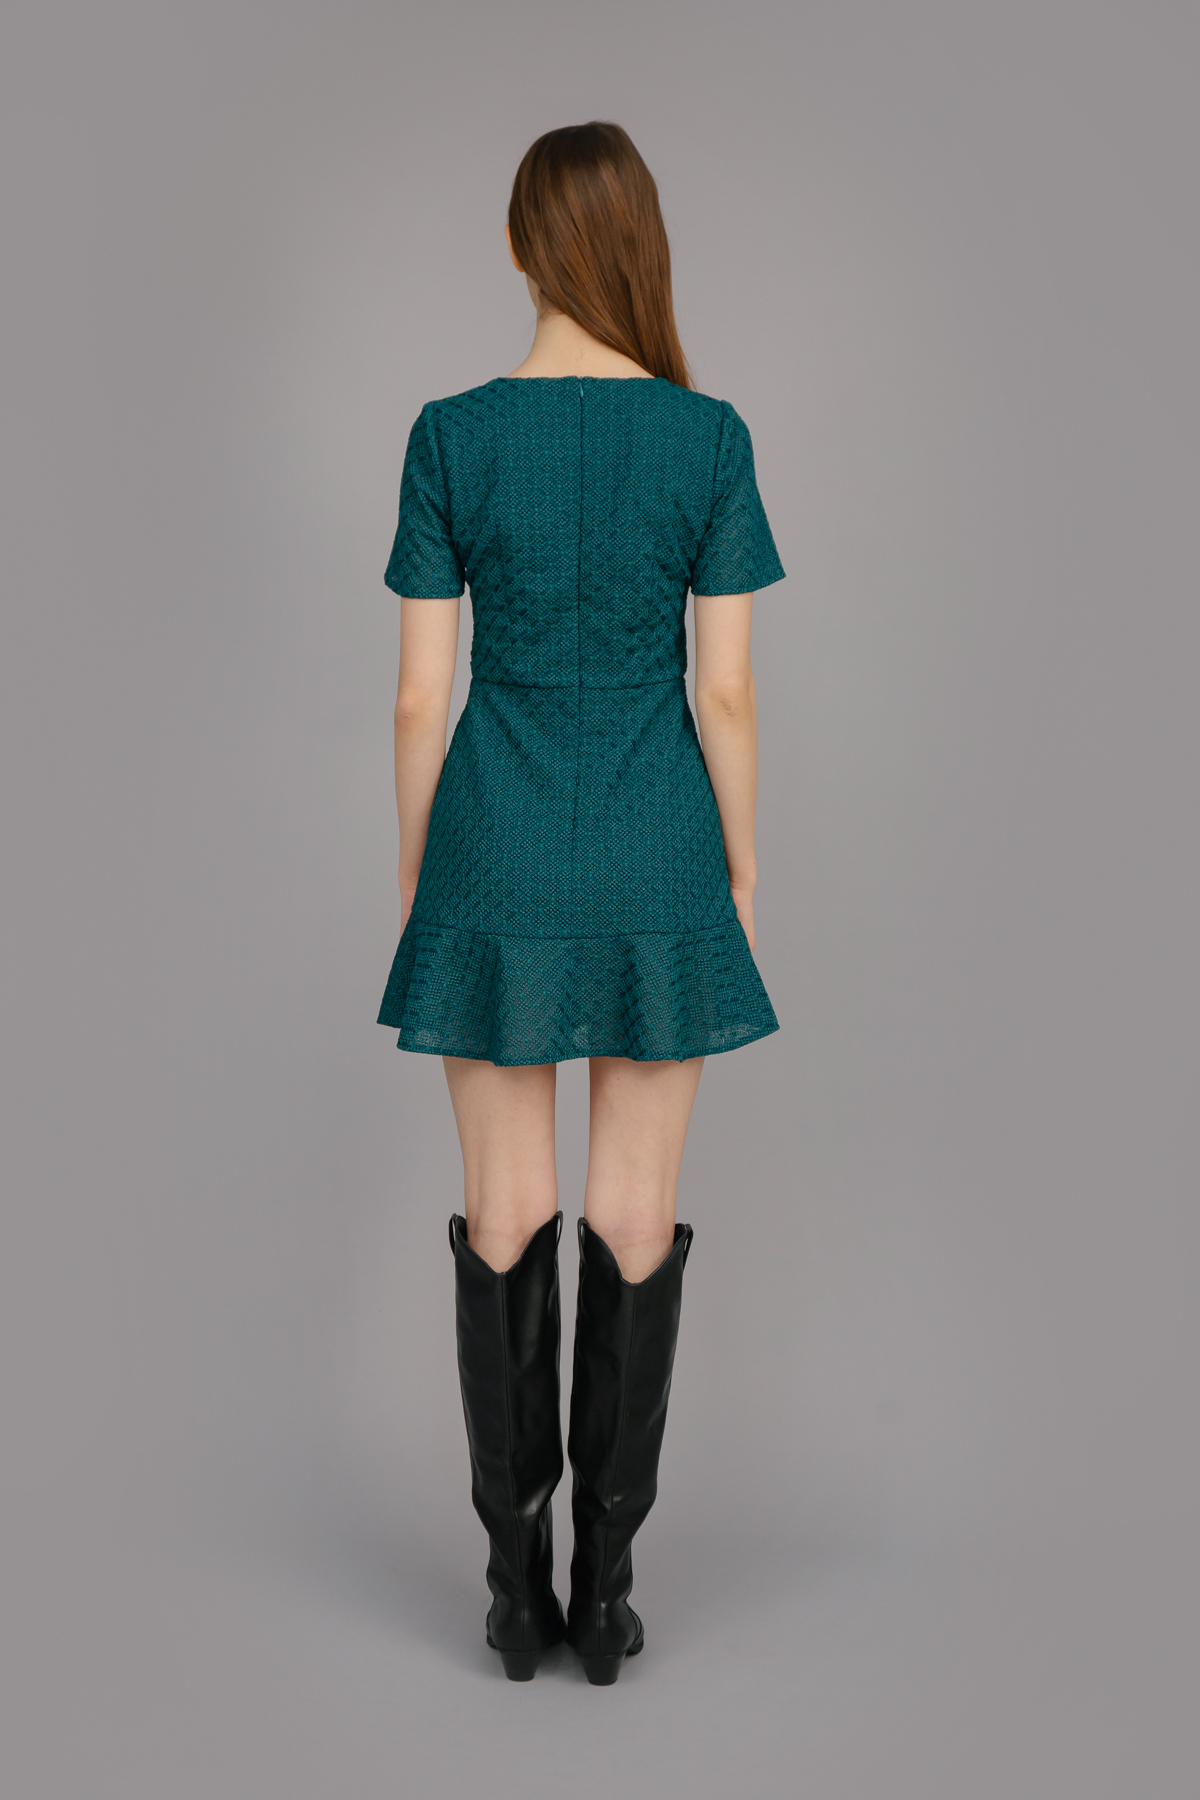 Green lace mini dress, photo 7